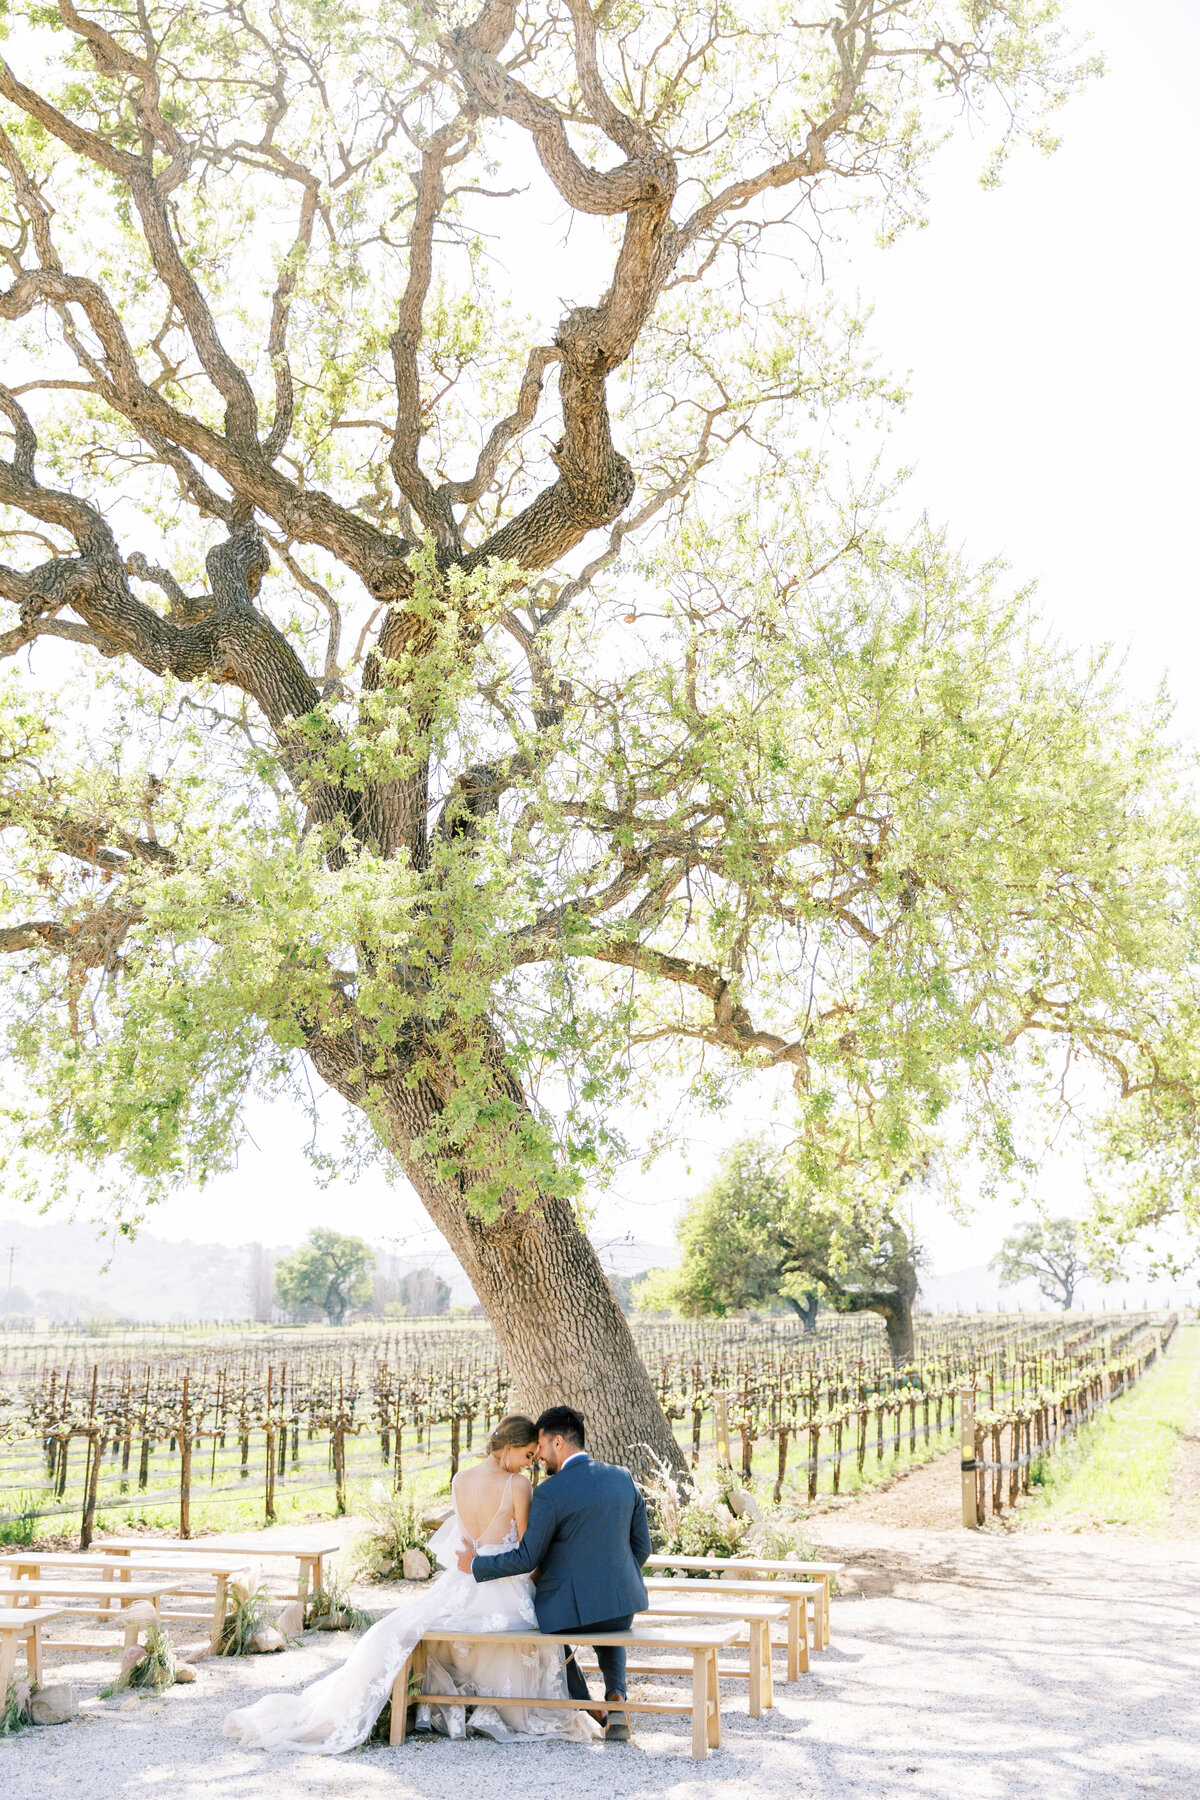 couple sitting on a bench under an oak tree in a vineyard